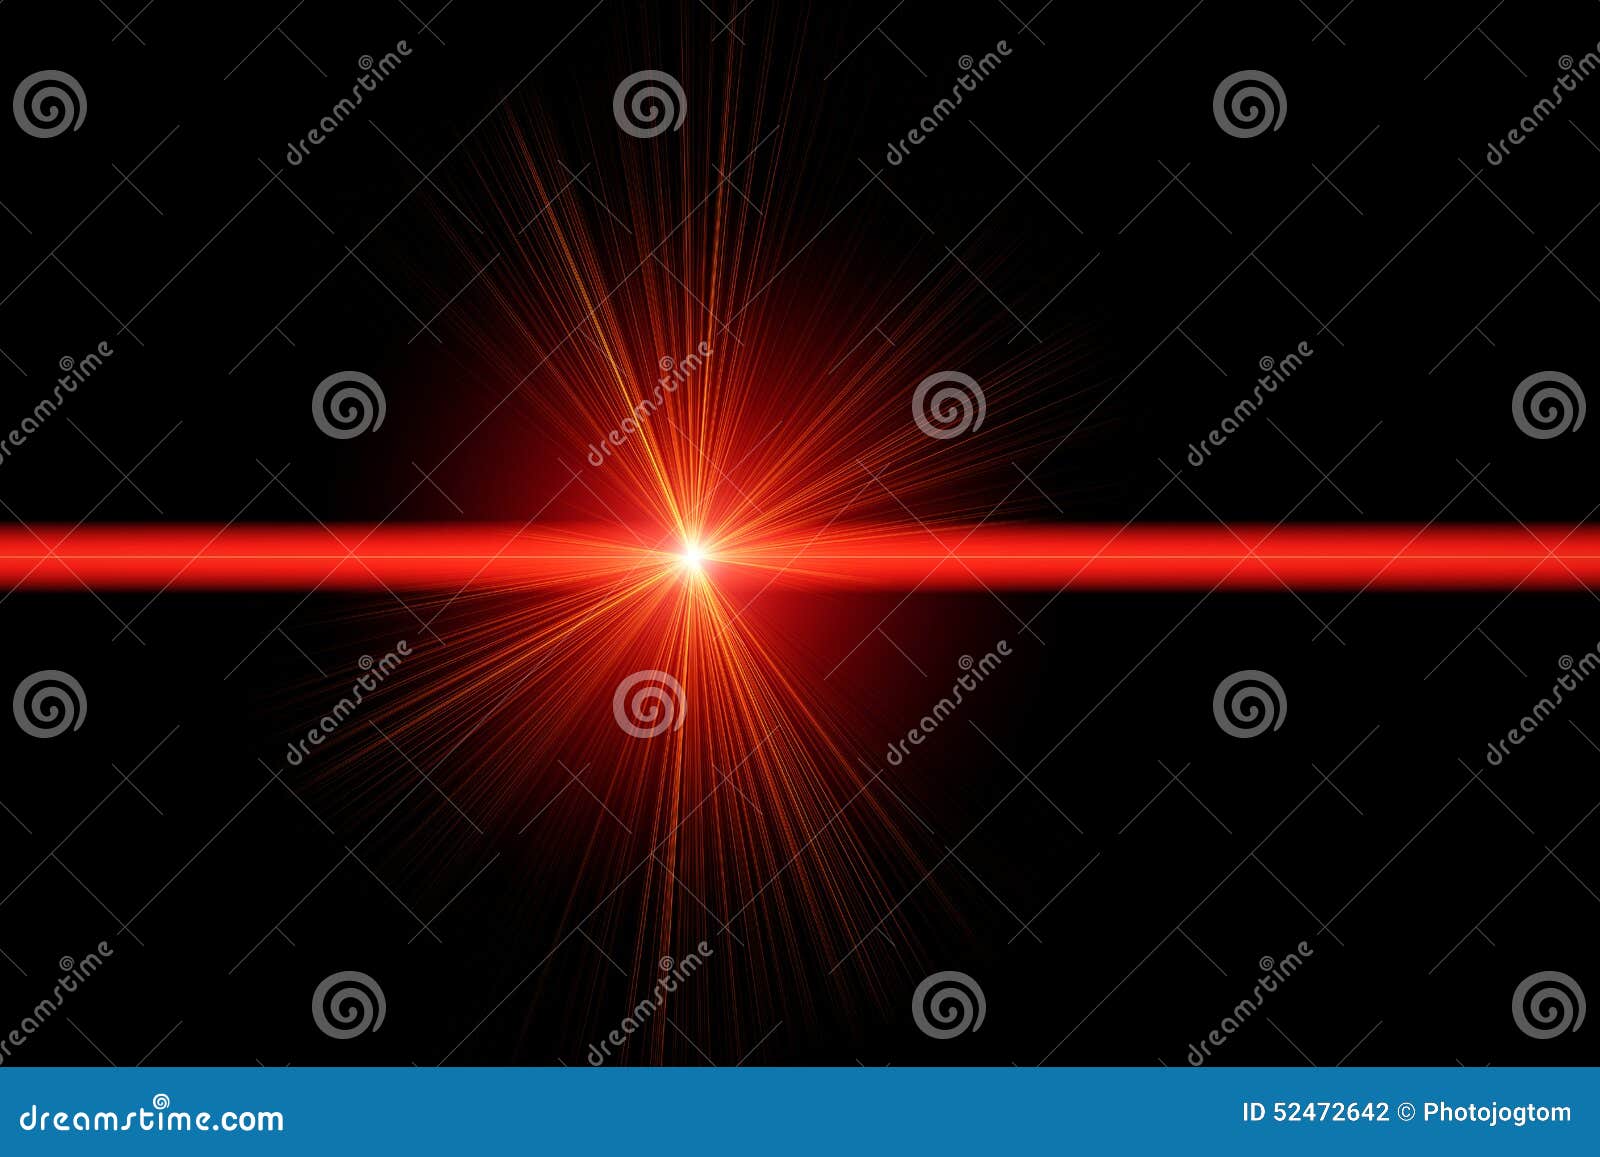 Red laser light of communication - 52472642